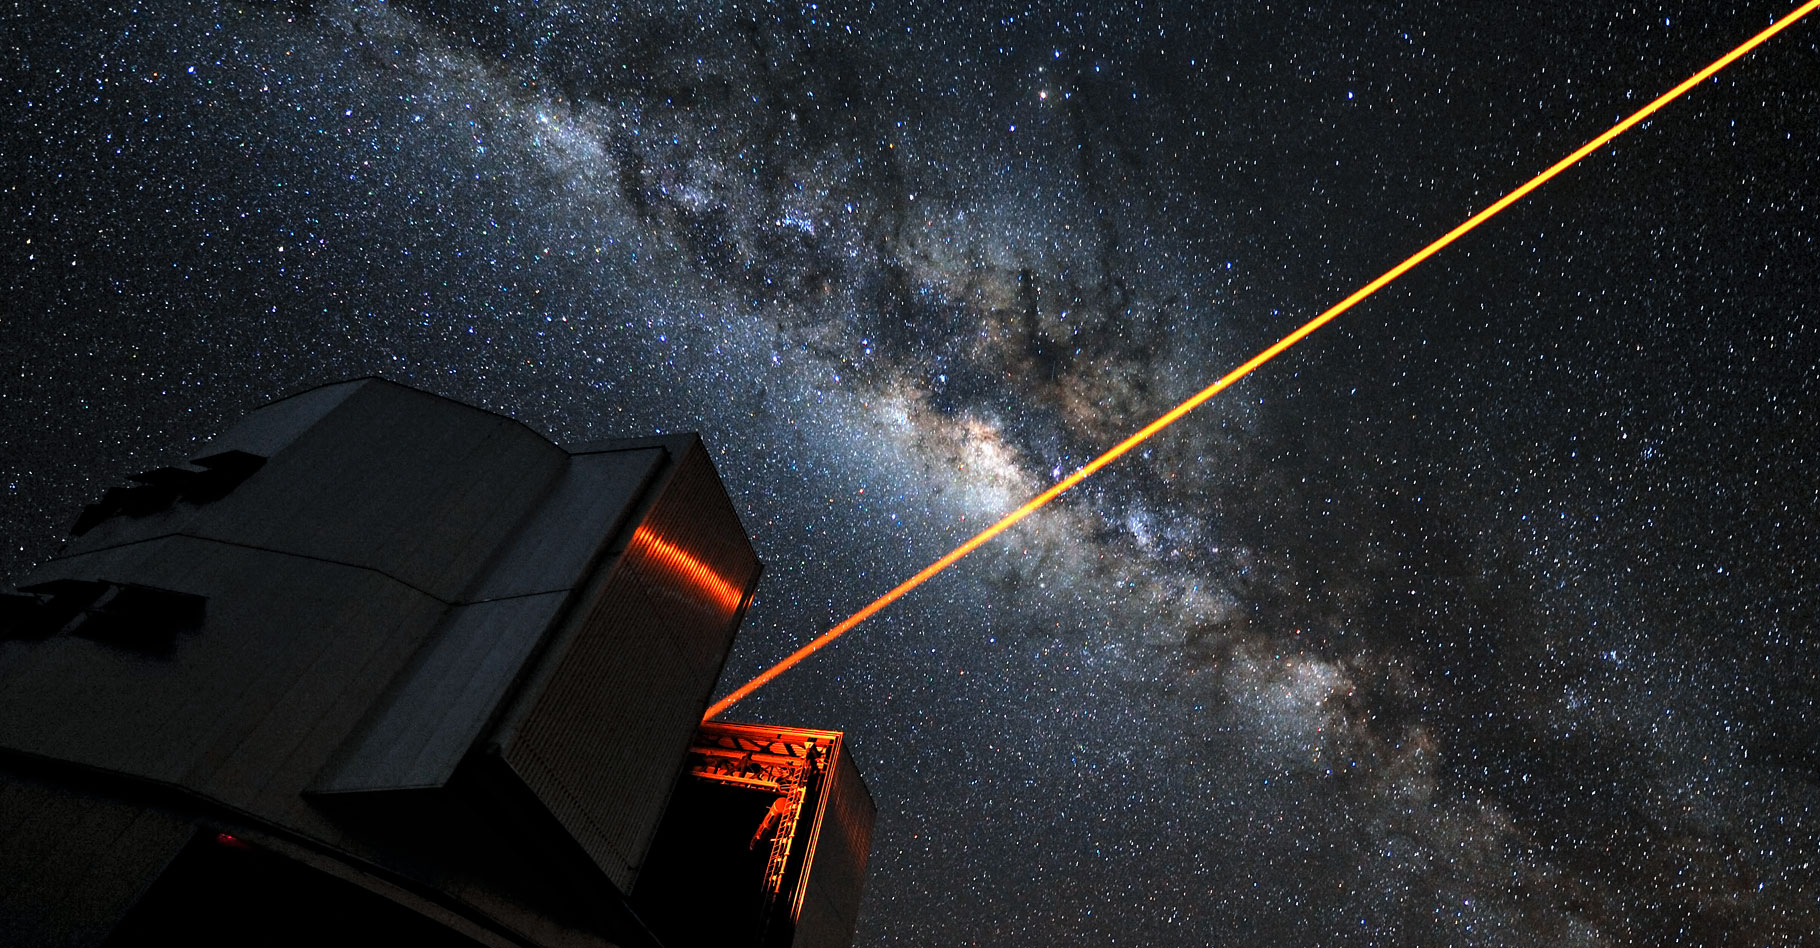 Le laser de guidage&nbsp;stellaire du VLT (Very large telescope).&nbsp;© ESO, G. Hüdepohl,&nbsp;CC by 4.0&nbsp;